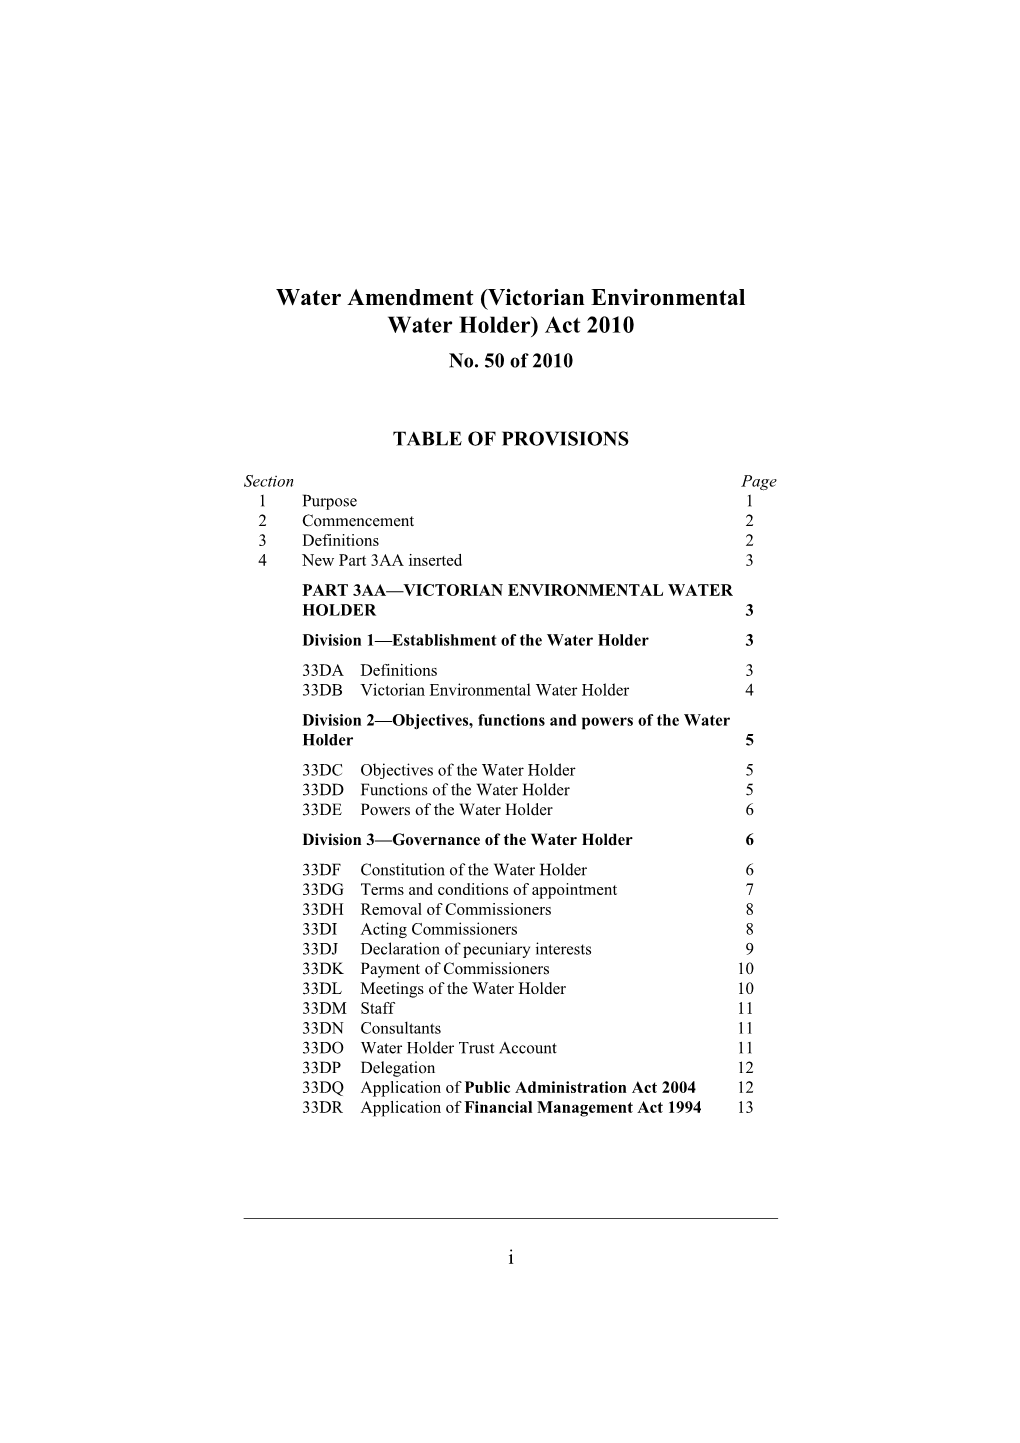 Water Amendment (Victorian Environmental Water Holder) Act 2010